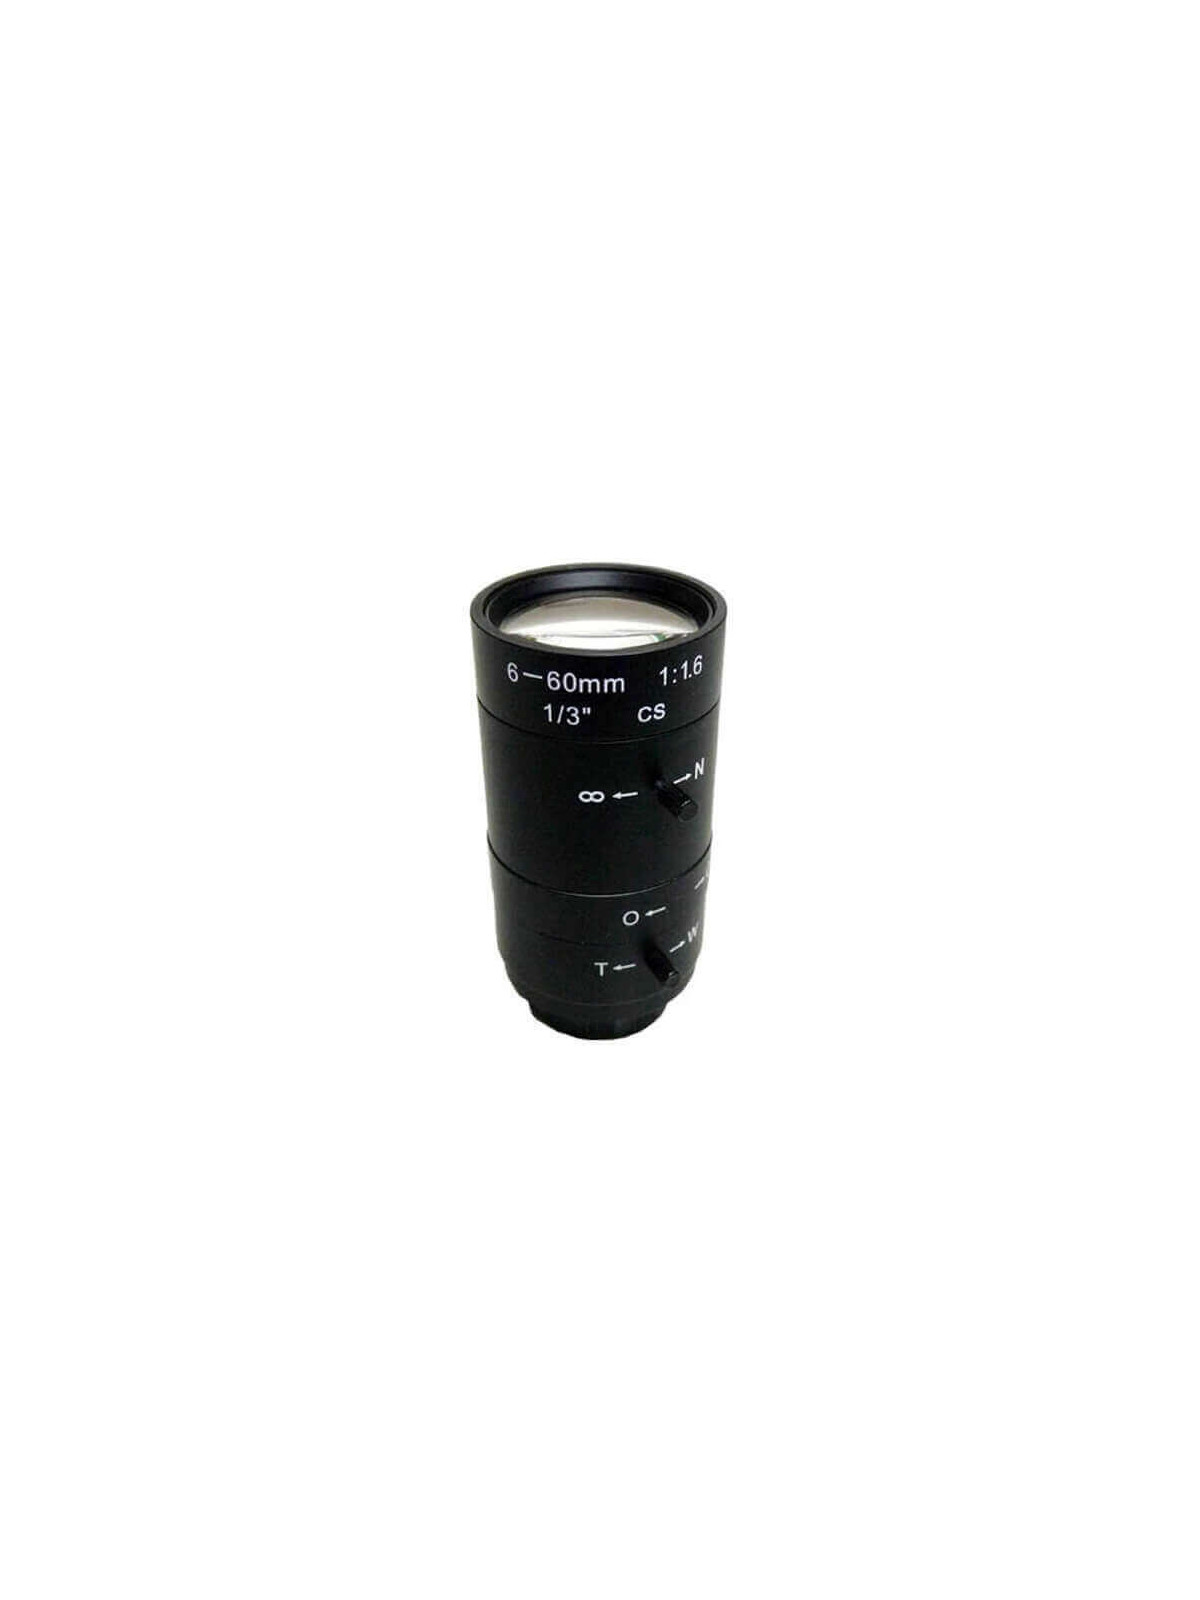 Óptica varifocal manual iris para cámara 6 - 60mm SSV06060